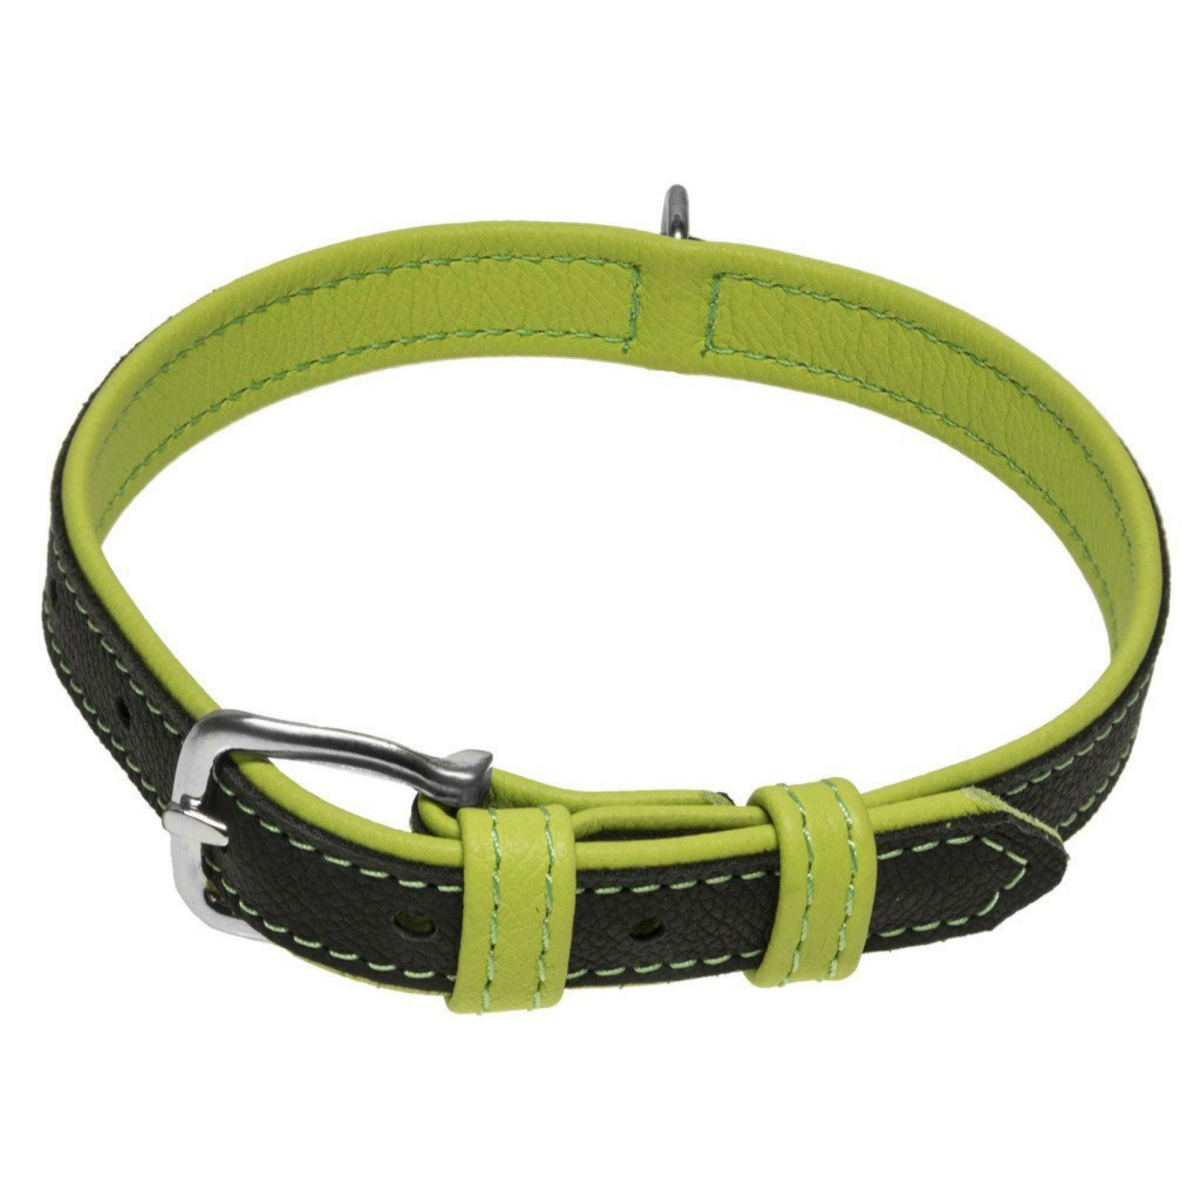 Dog Line L1013-lime-lg Soft Leather Dual Color Dog Collar, Lime Green - Large